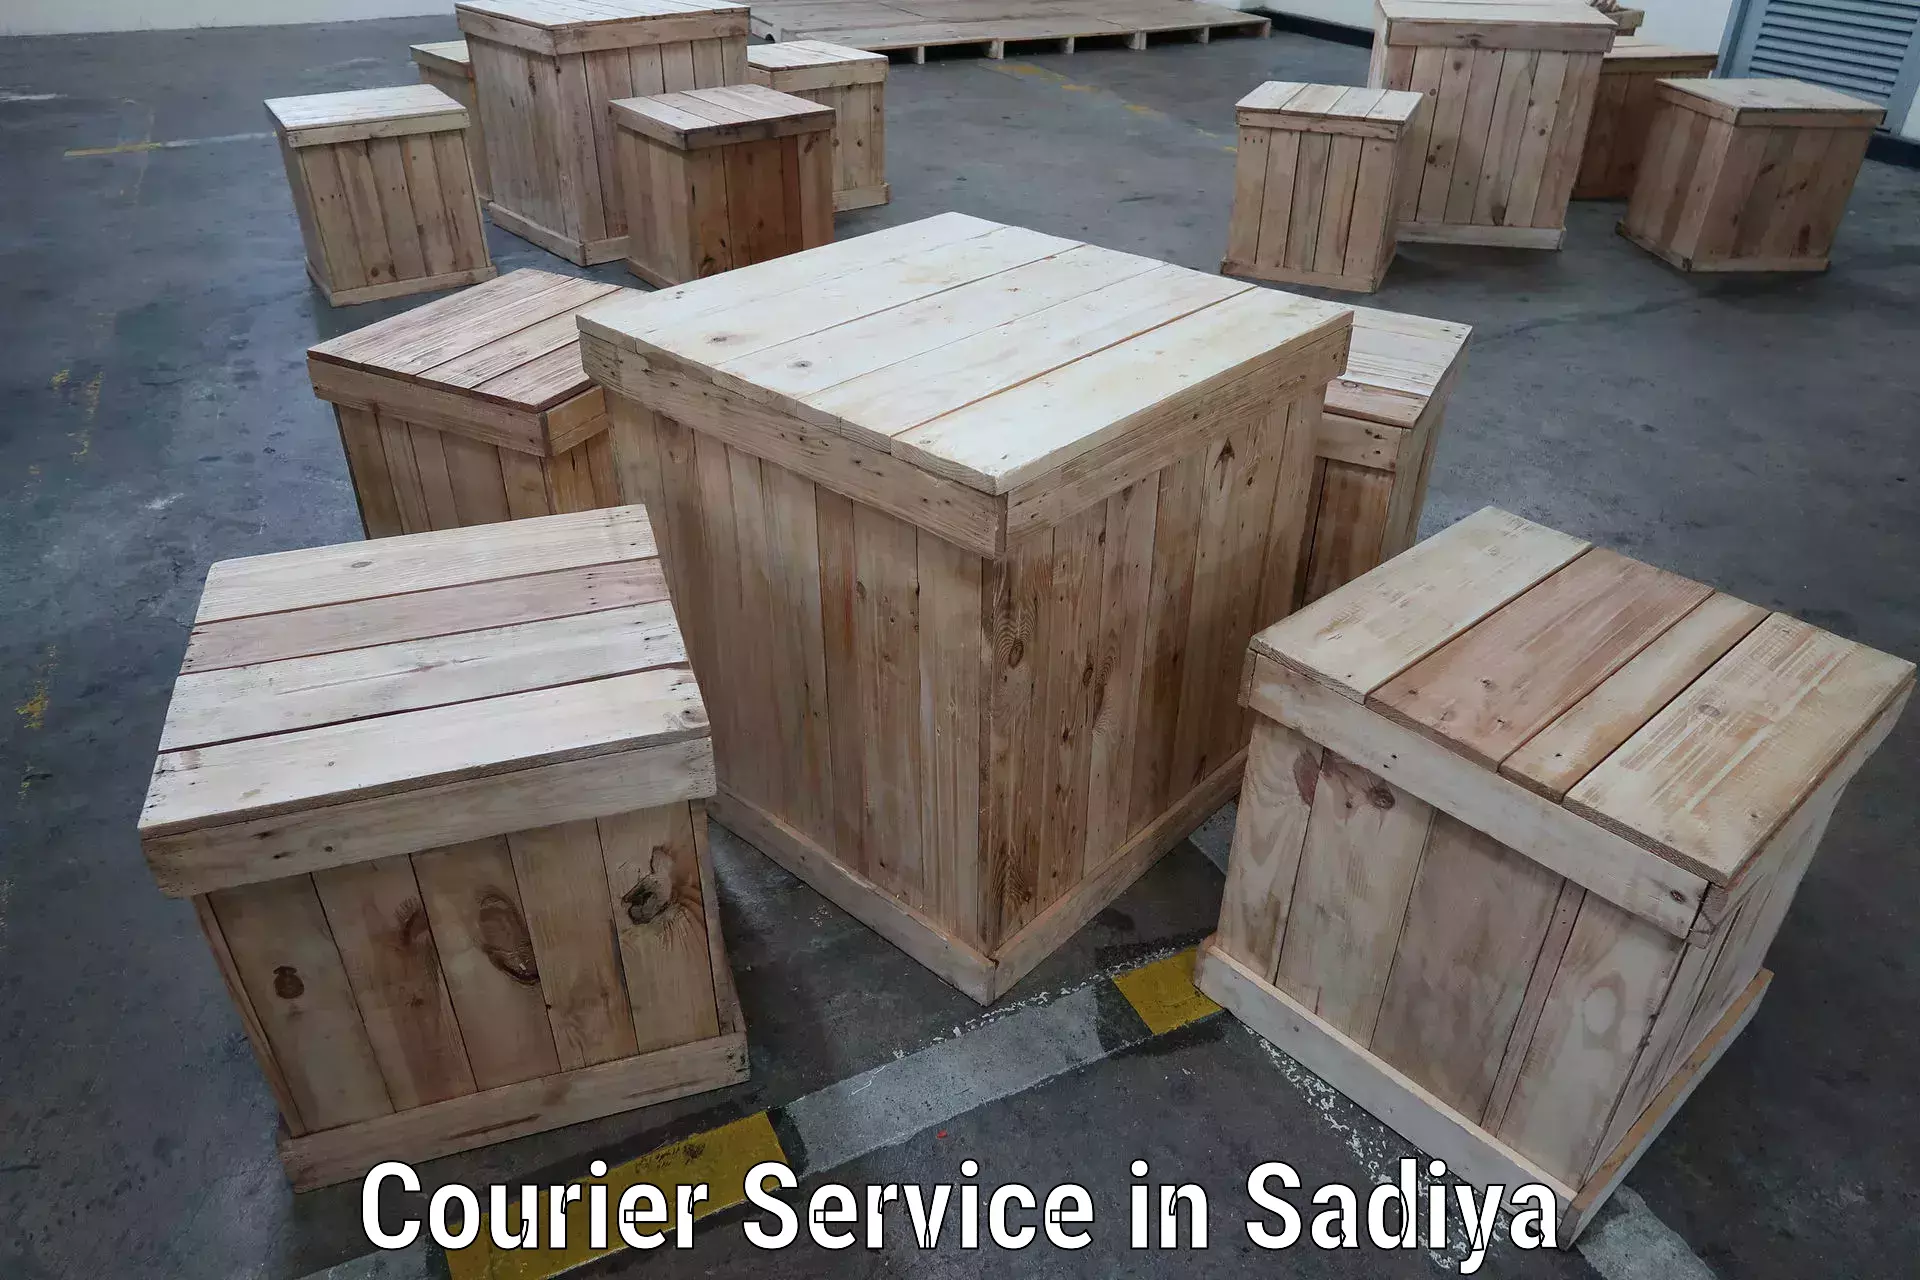 Courier service booking in Sadiya